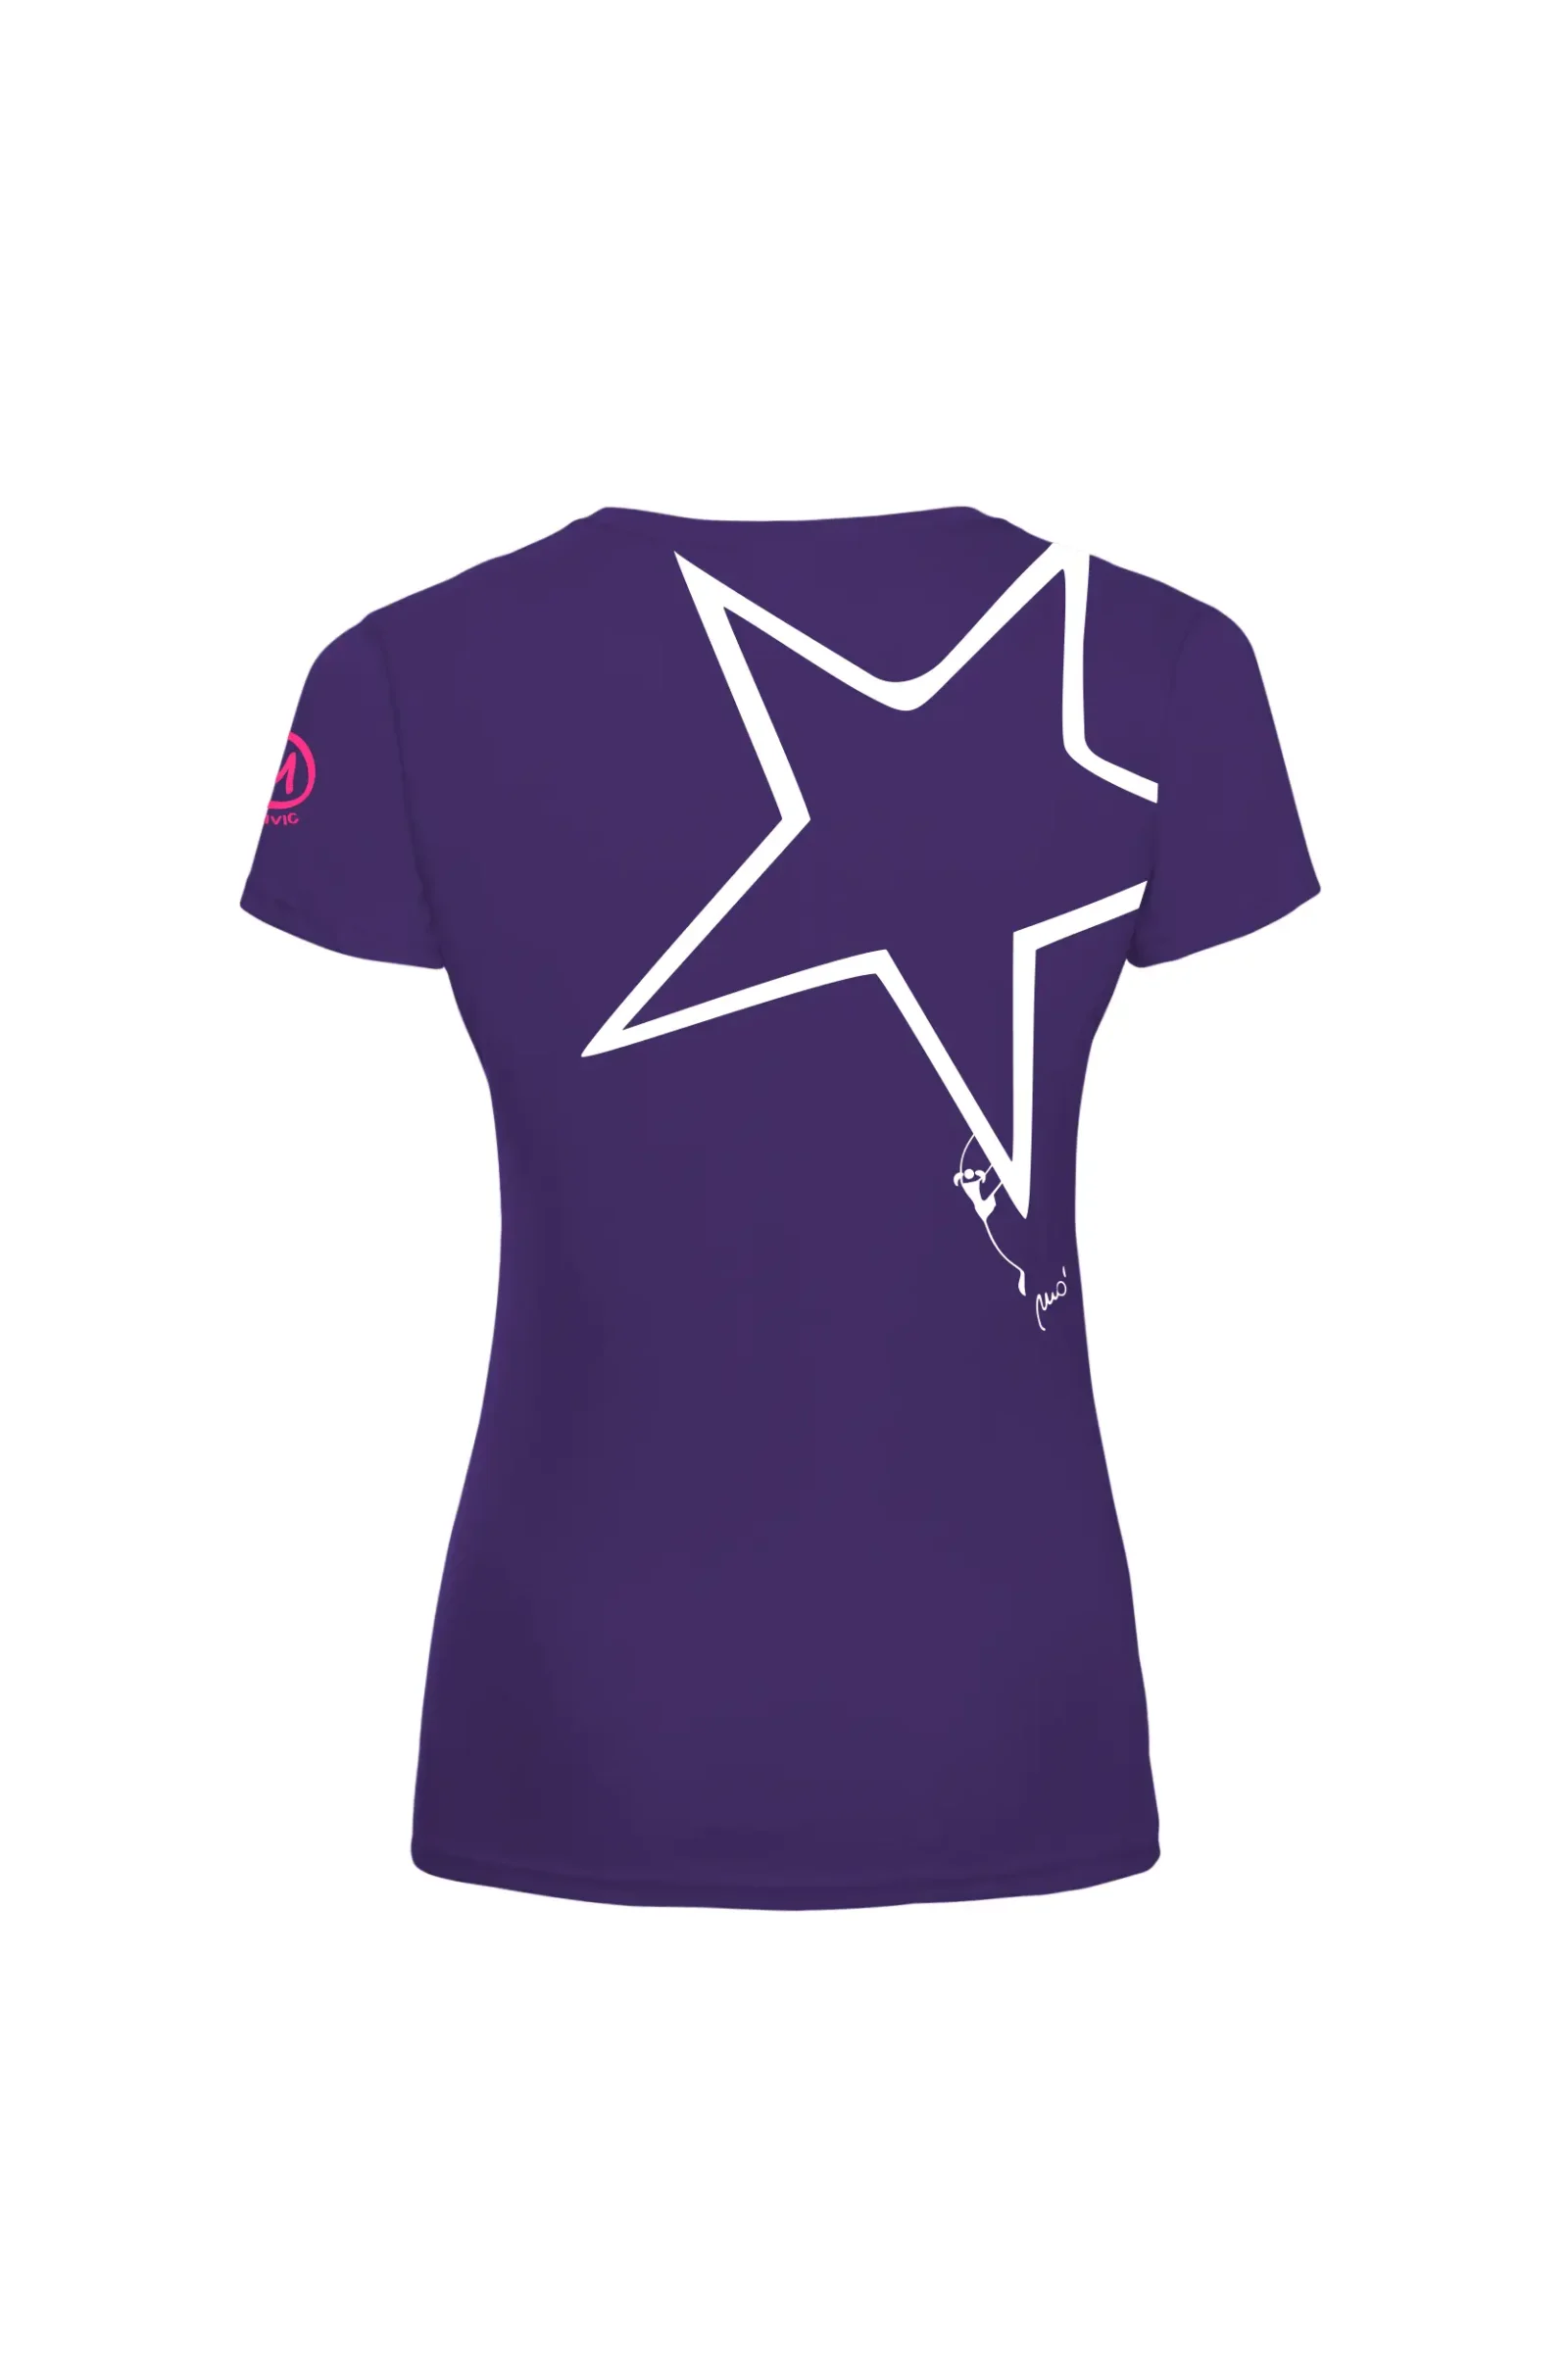 Women's climbing t-shirt - purple cotton - "Superstar" SHARON by MONVIC